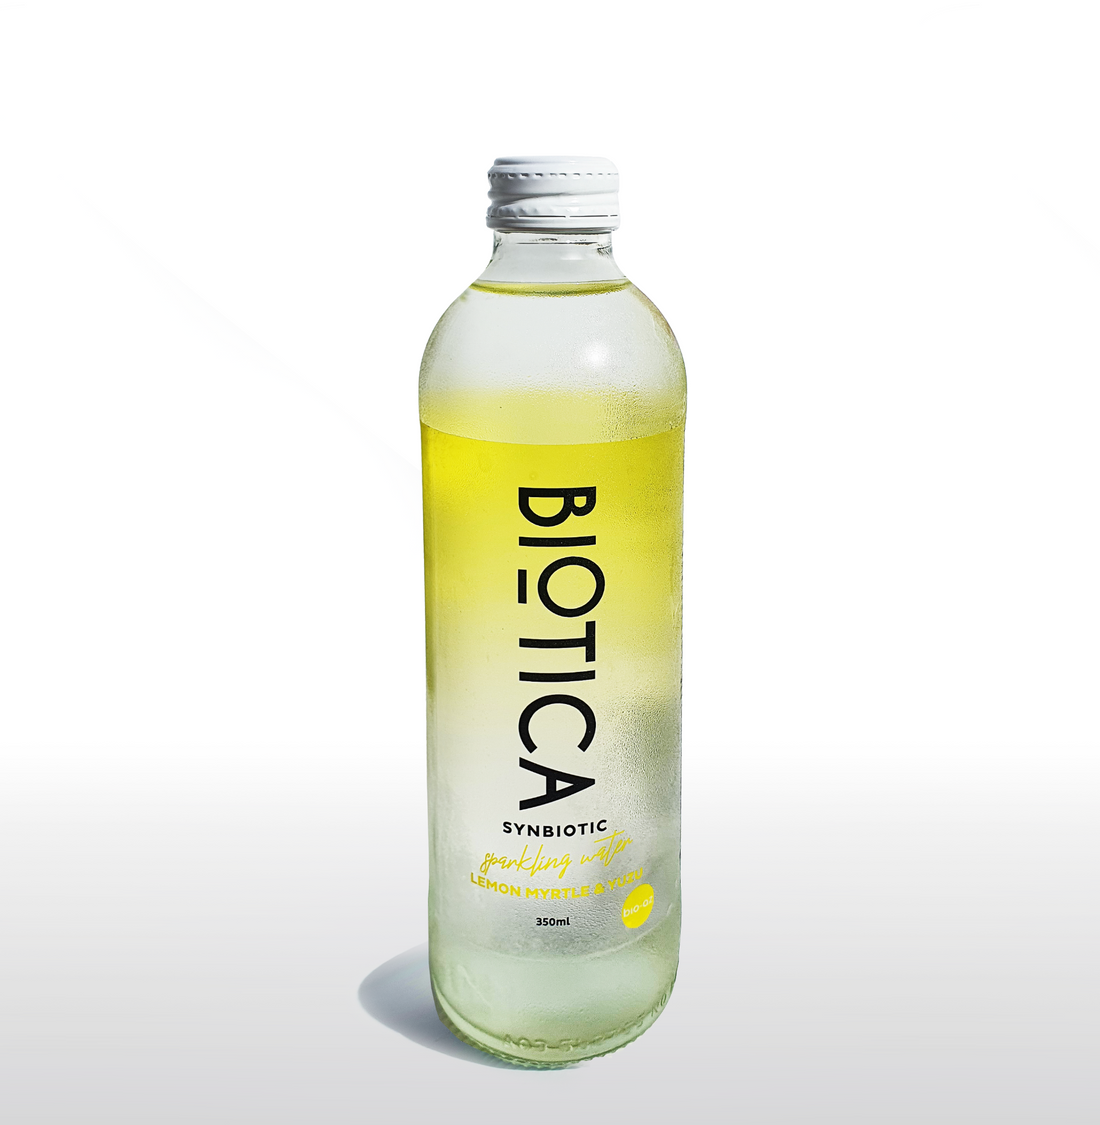 Probiotic Drink Lemon Myrtle and Yuzu Biotica Synbiotic Sparkling Water Glass Bottle (350ml x 12)